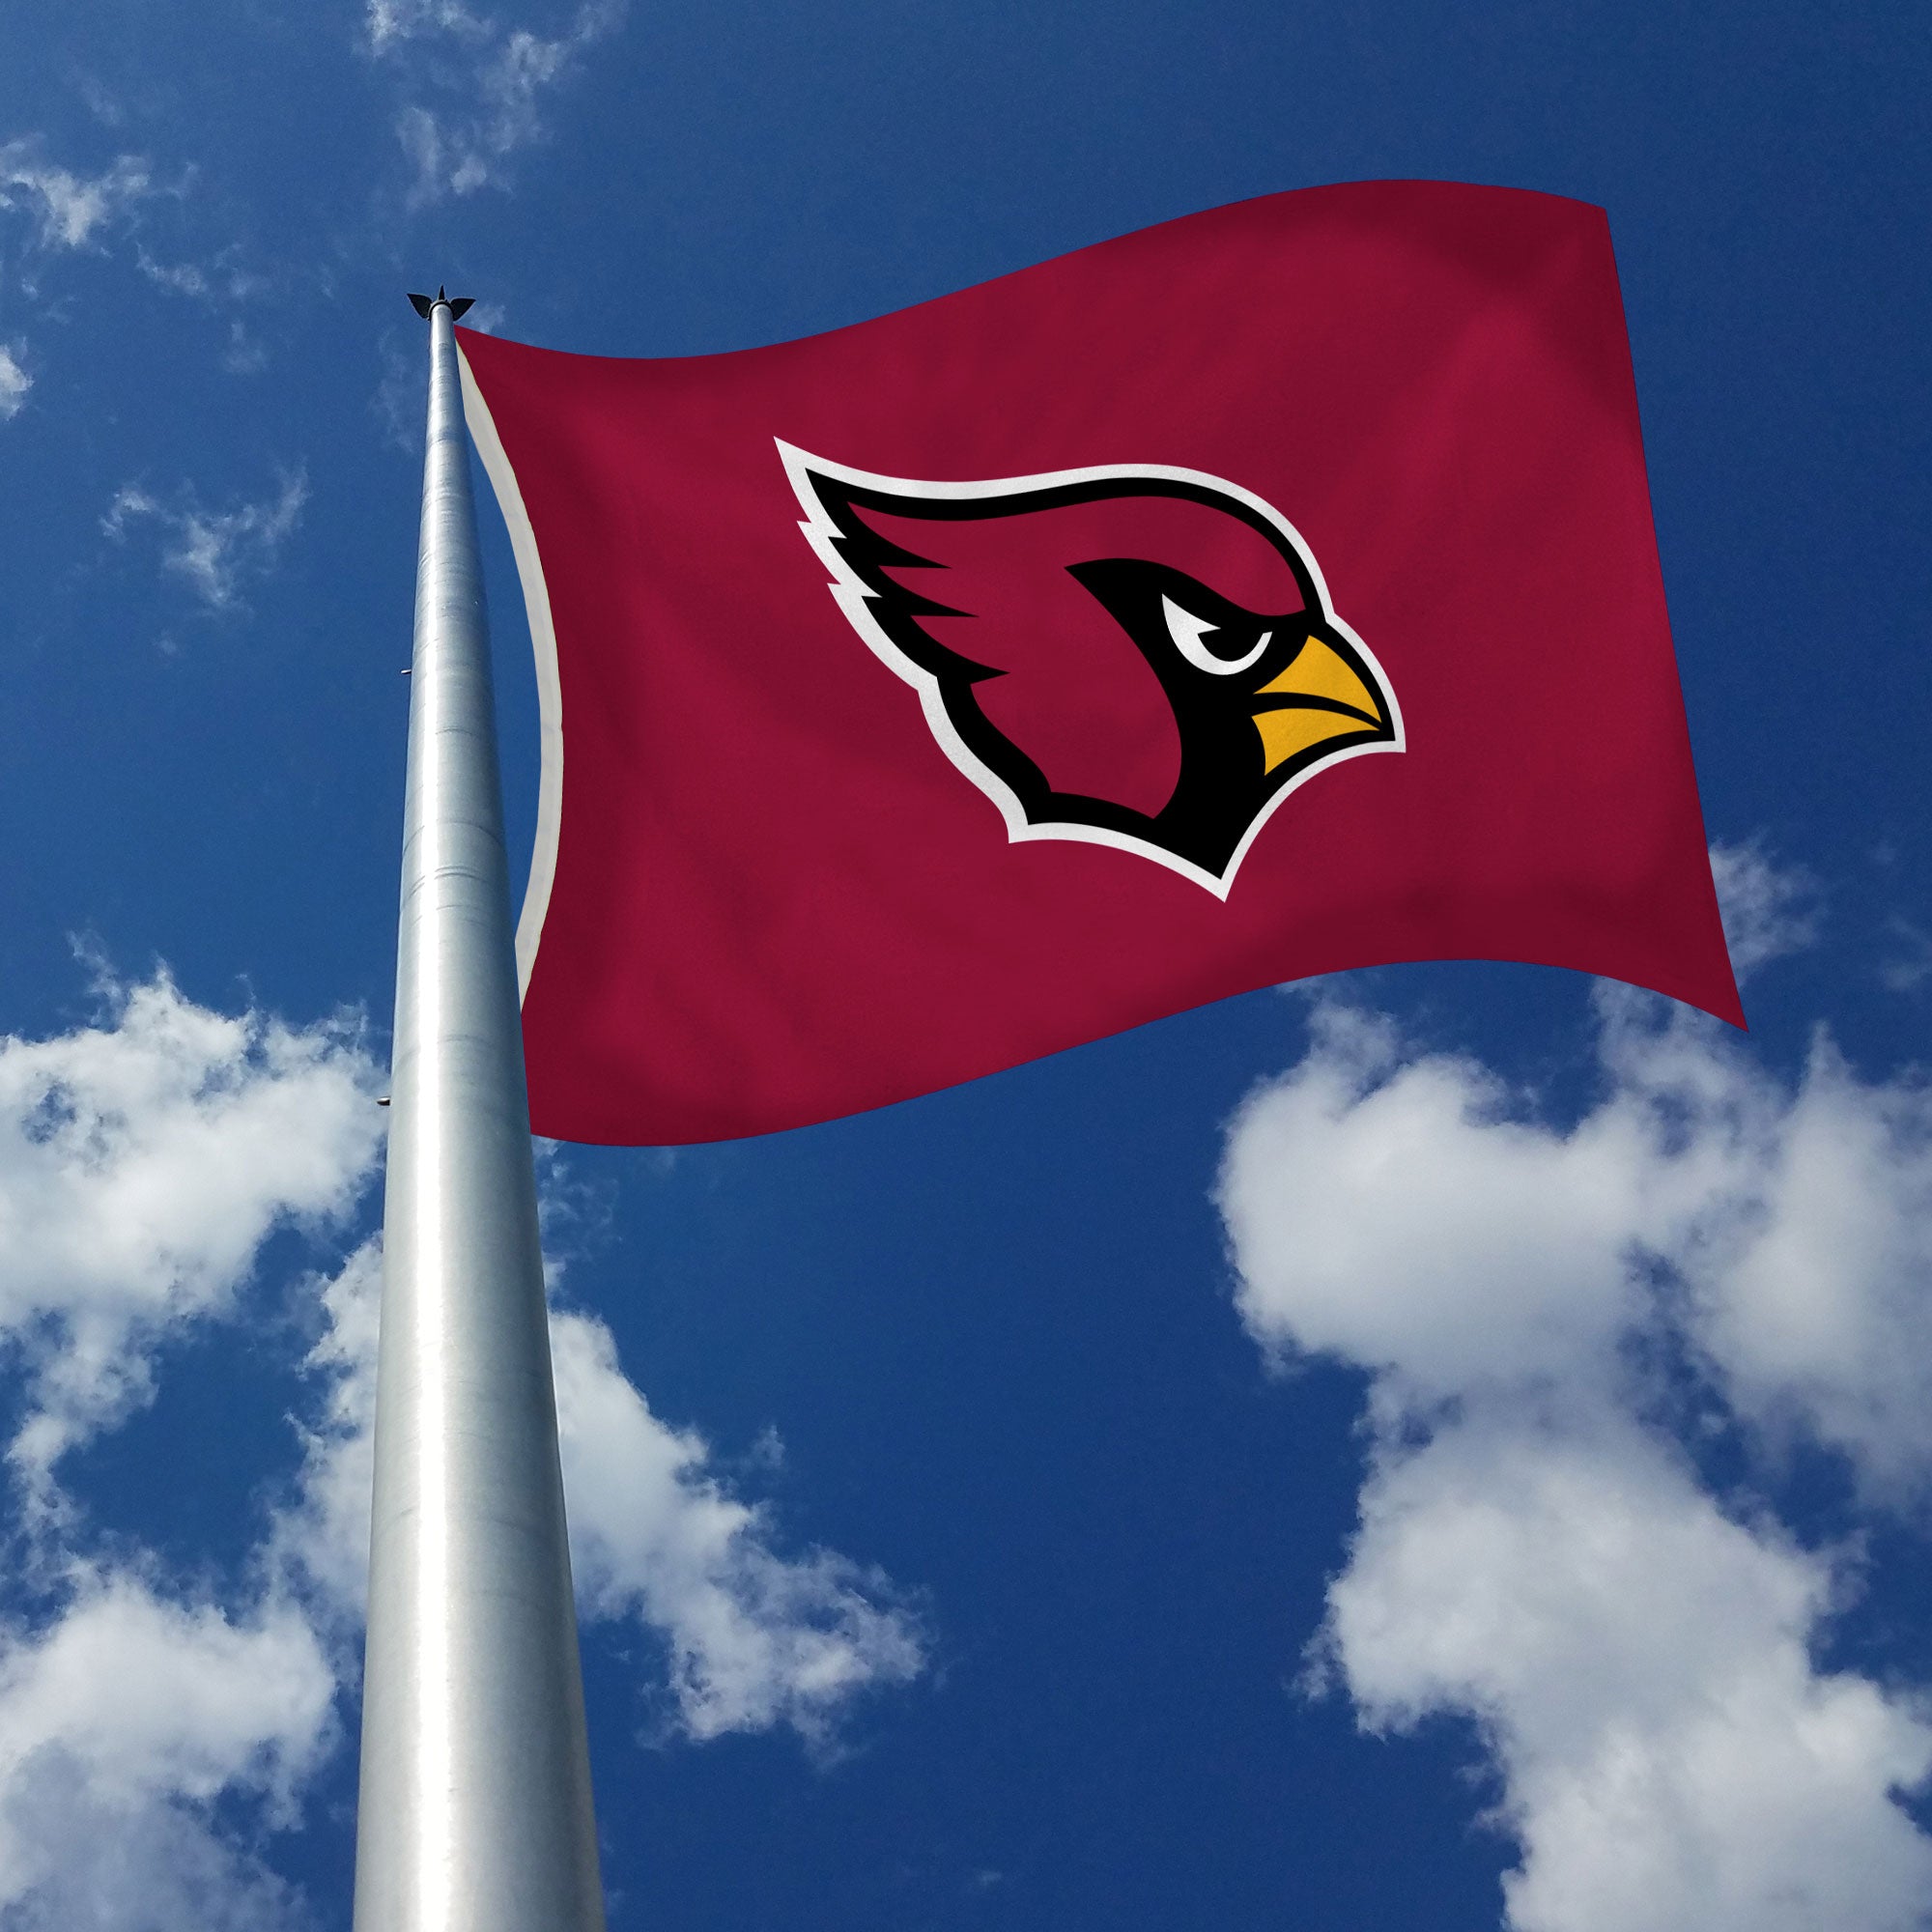 NFL Arizona Cardinals Prime 3' x 5' Flag 